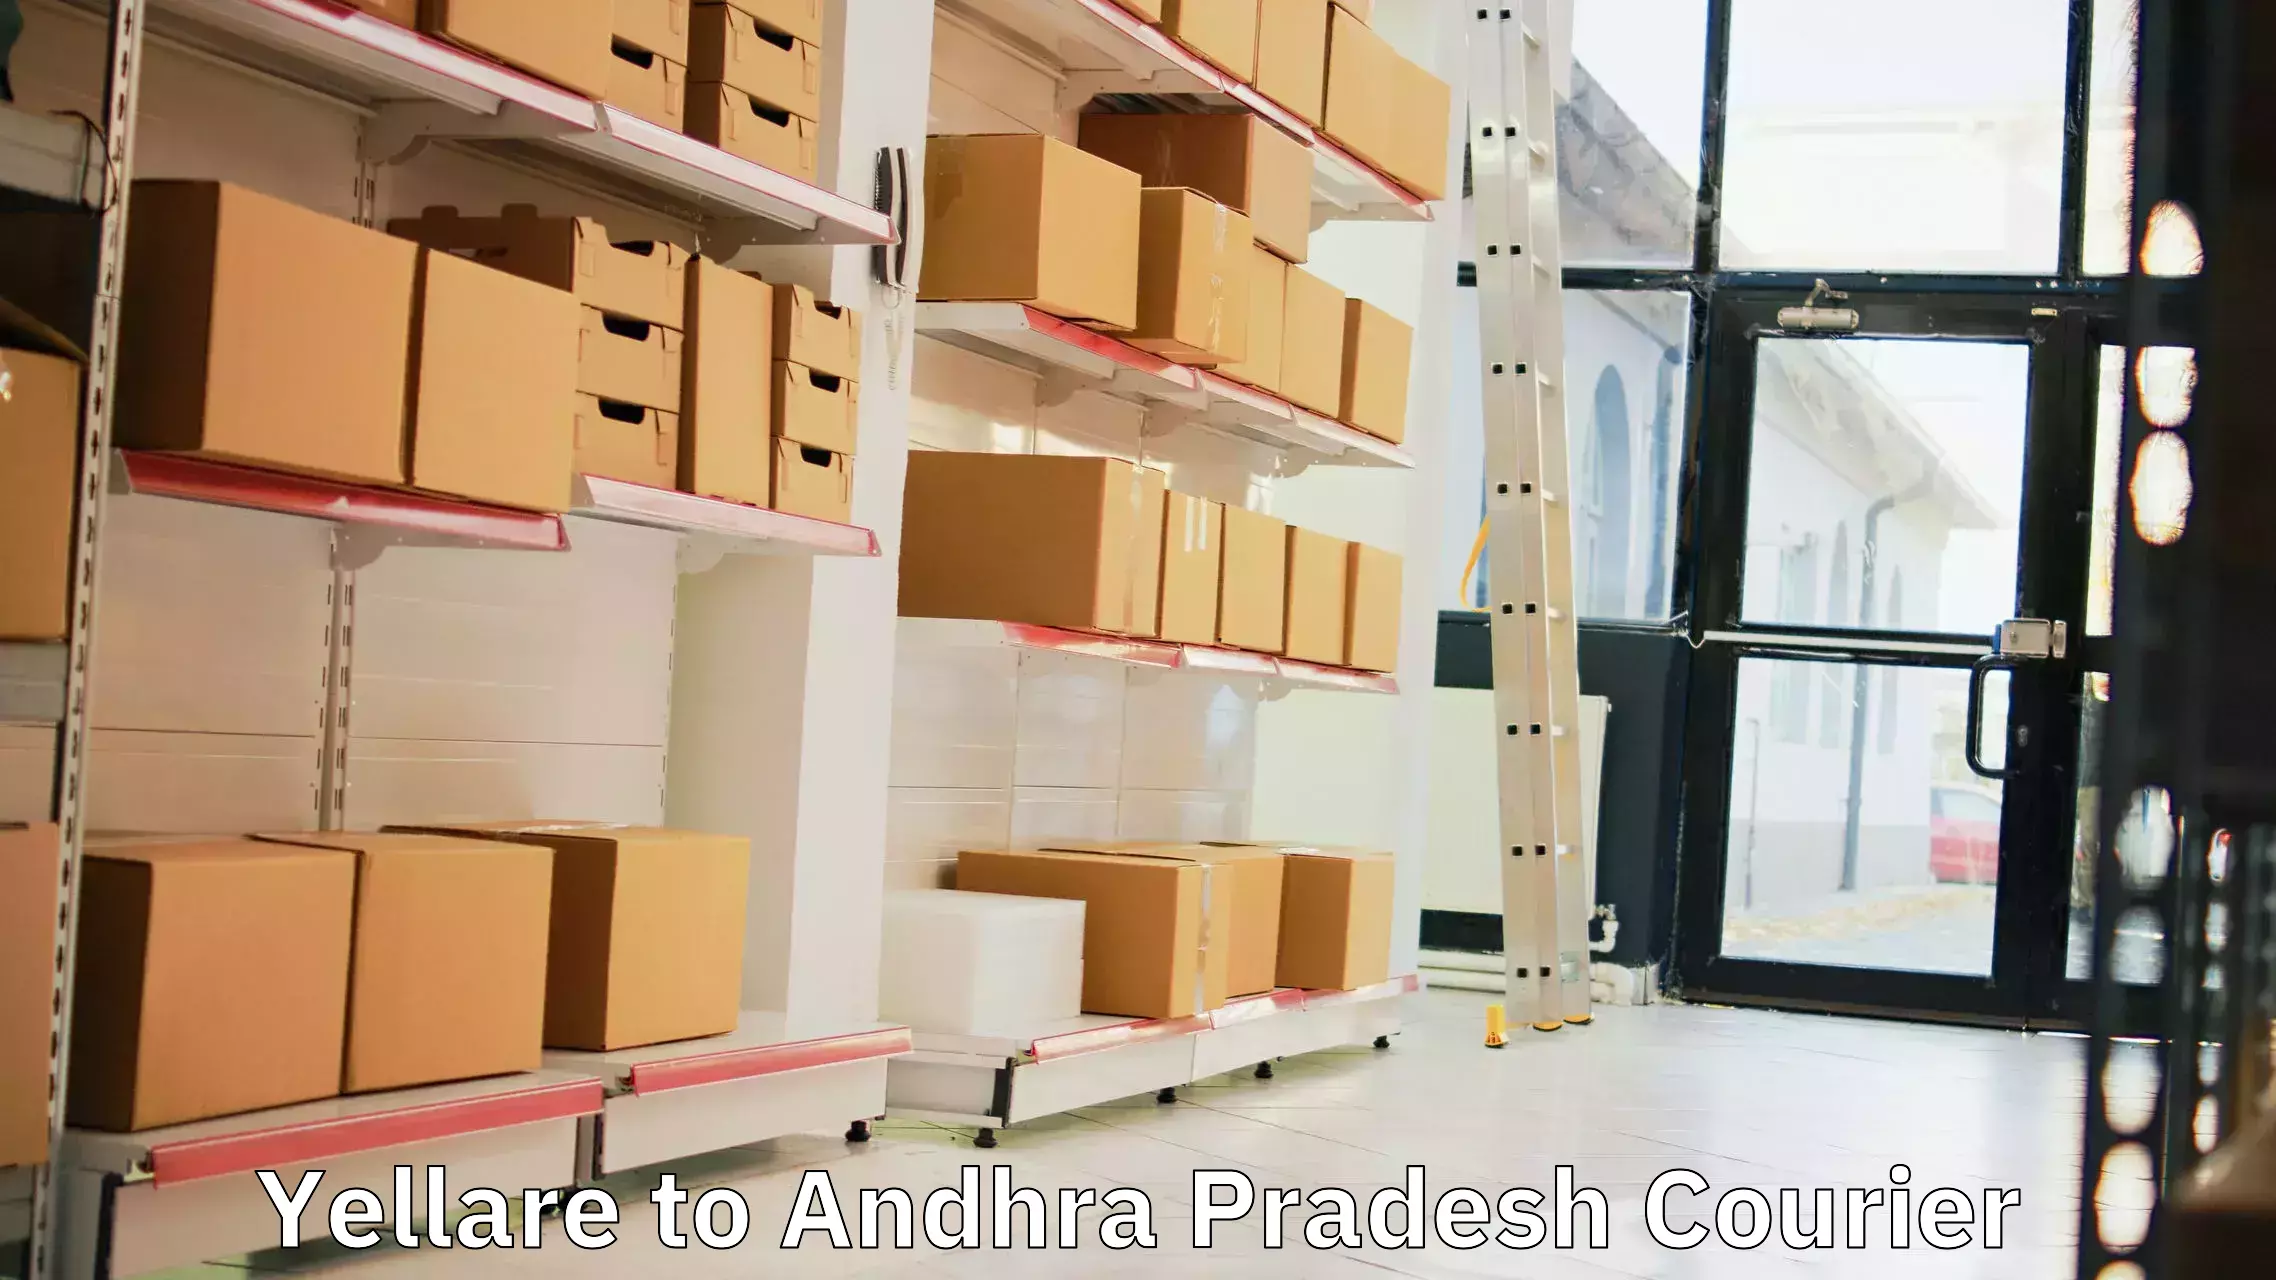 Delivery service partnership Yellare to Andhra Pradesh